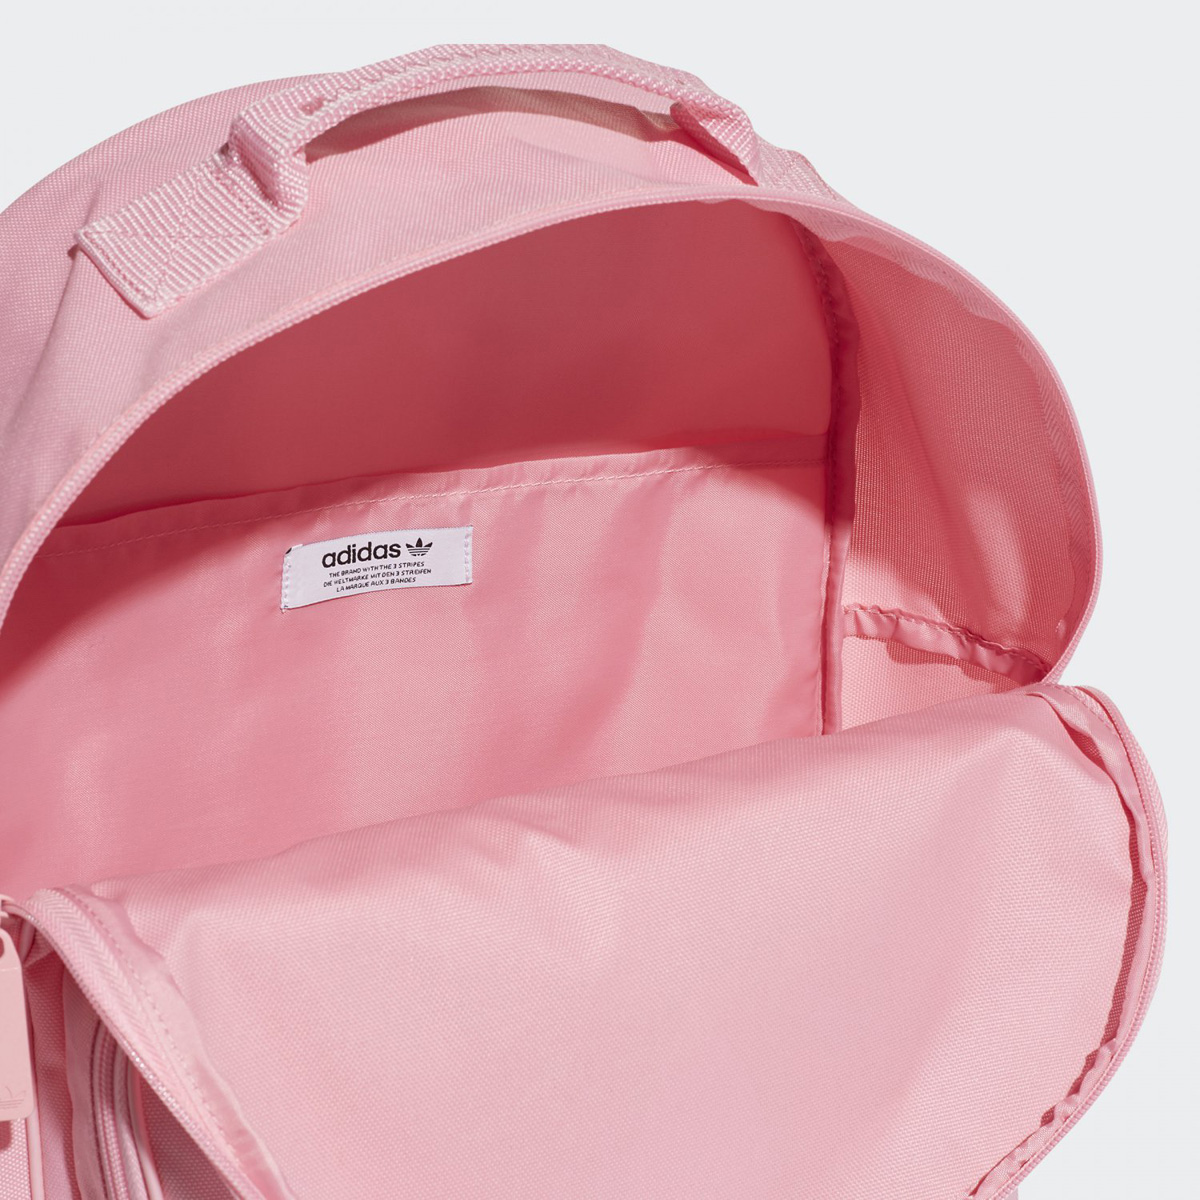 atmos pink: adidas Originals BACKPACK CLASSIC TREFOIL (アディダスバックパッククラシックトレフォイル) Light Pink 18FW-I ...